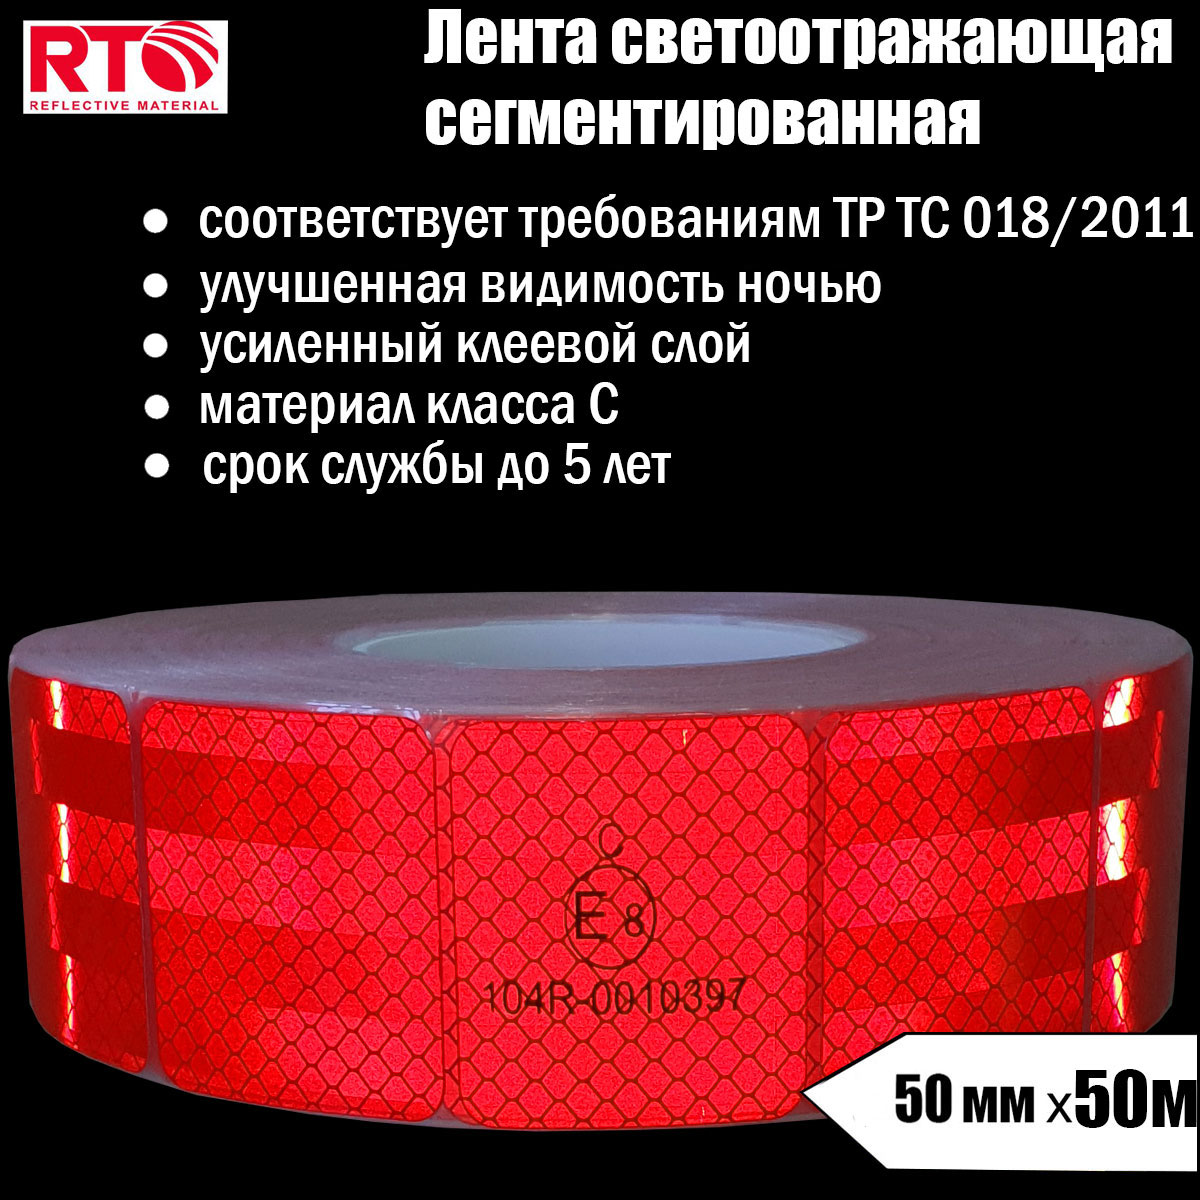 Лента светоотражающая сегментированная RTLITE RT-V104 для контурной маркировки, 50мм х 50м лента светоотражающая для контурной маркировки rtlite rt v104 50 8 мм х 50 м желтая